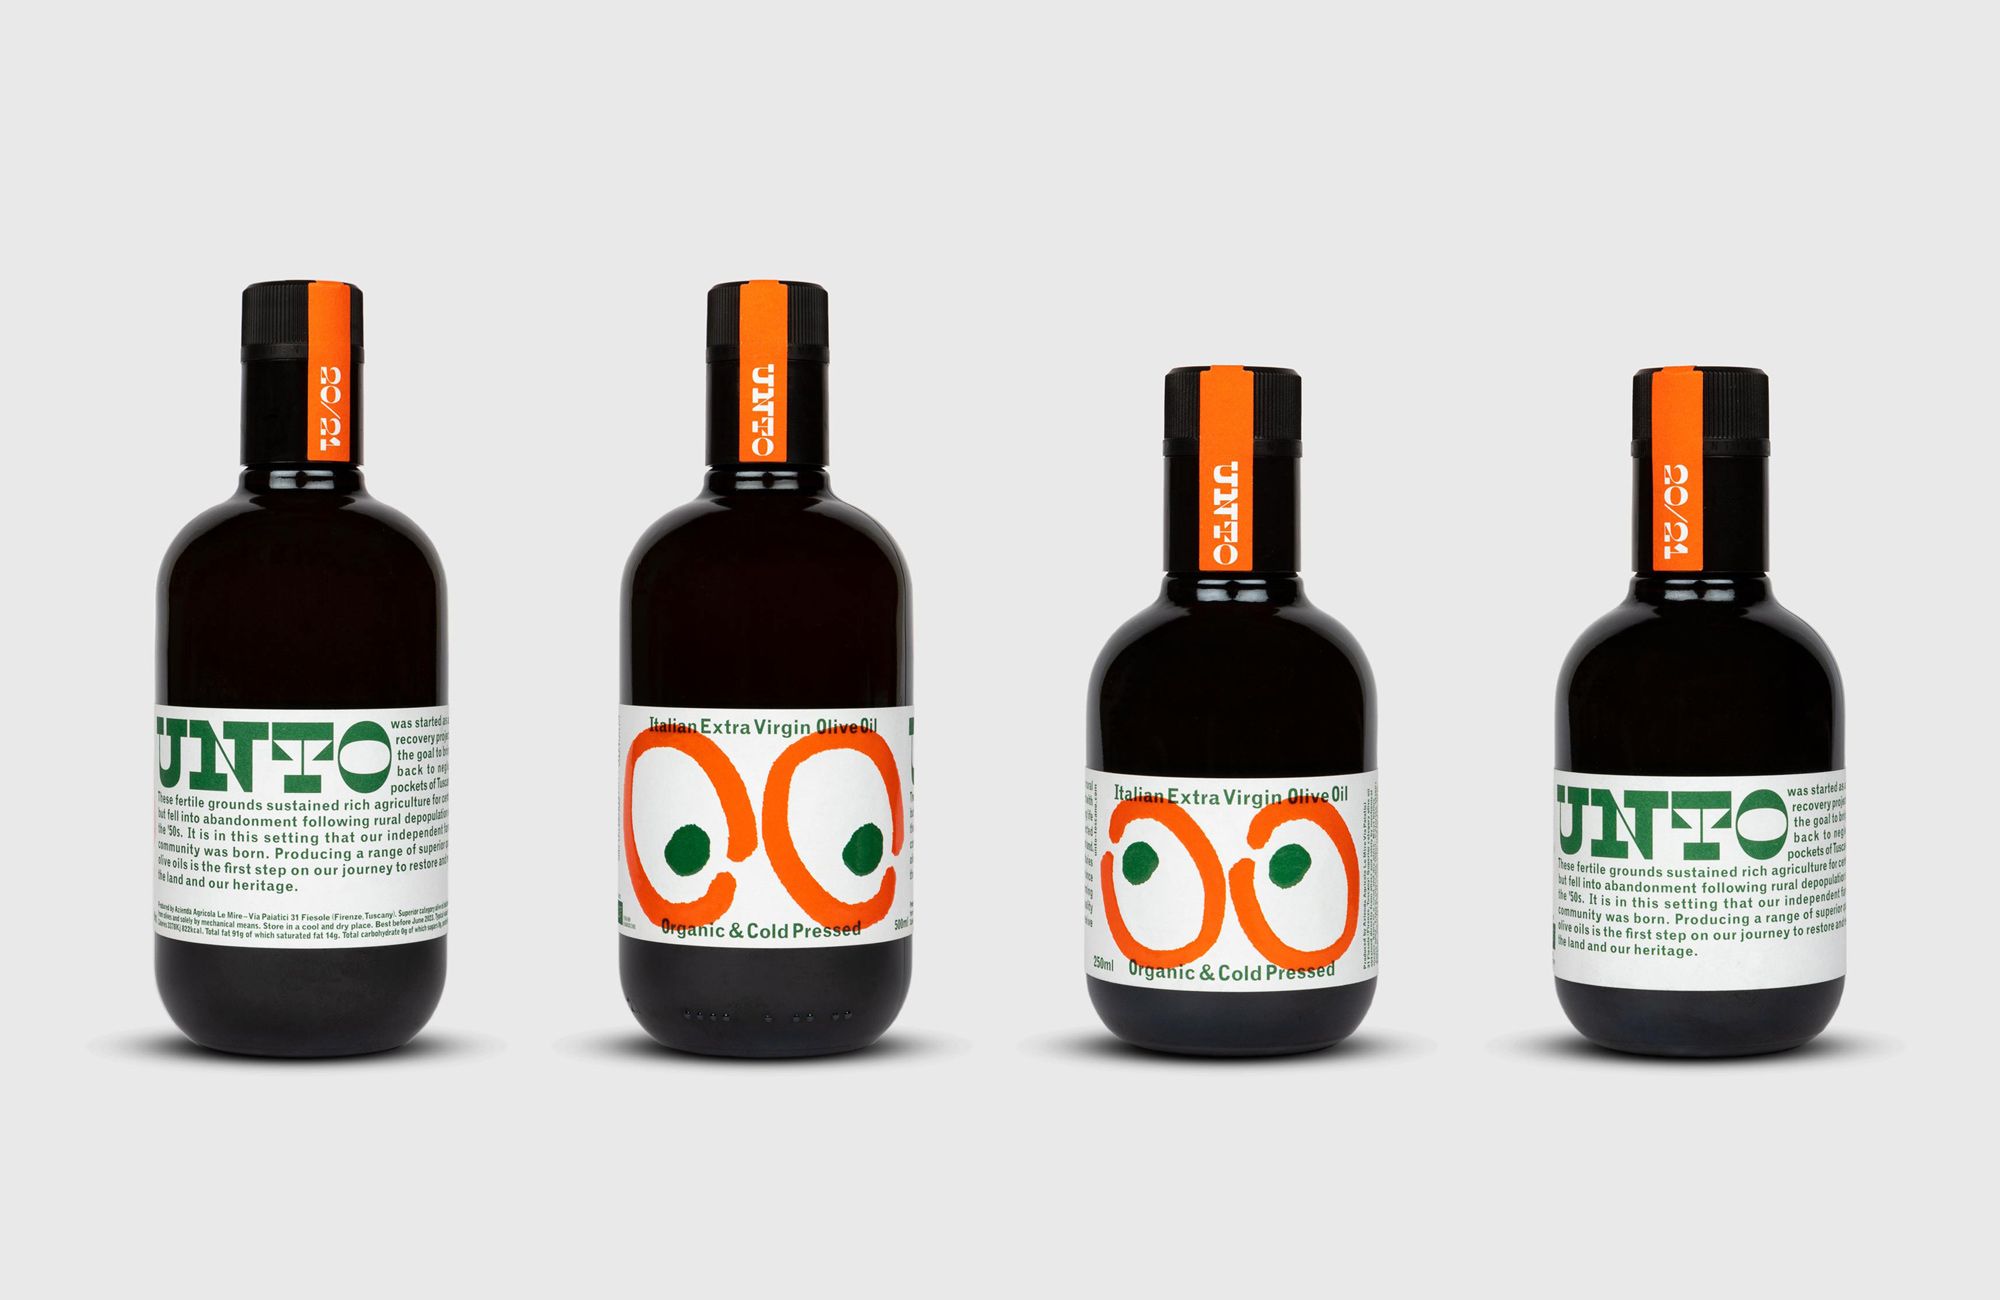 Branding and packaging design for Italian Extra Virgin Olive Oil brand Unto designed by Studio Bergini.